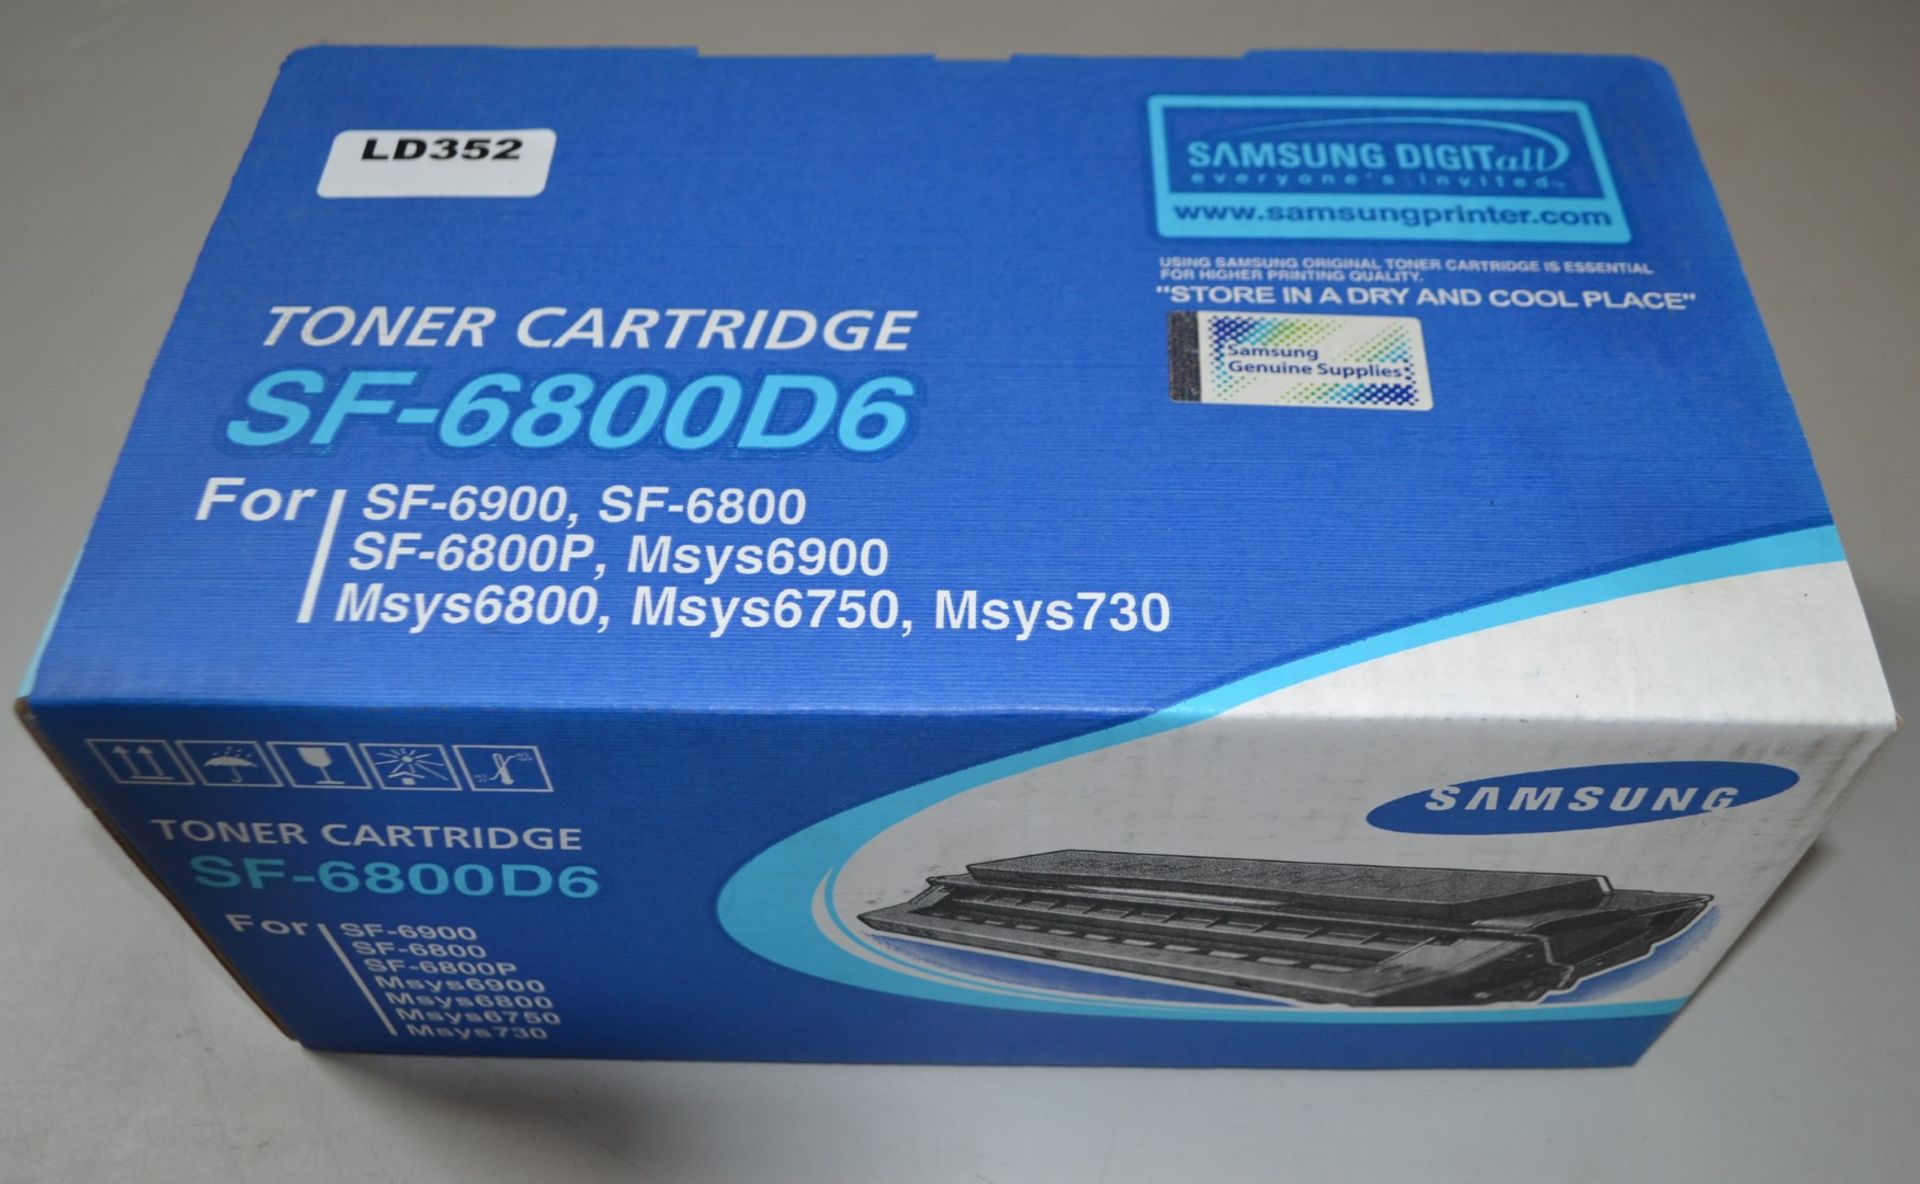 1 x New Samsung Toner Cartridge SF-6800D6 - Ref: LD352 - CL409 - Altrincham WA14 - Image 2 of 4